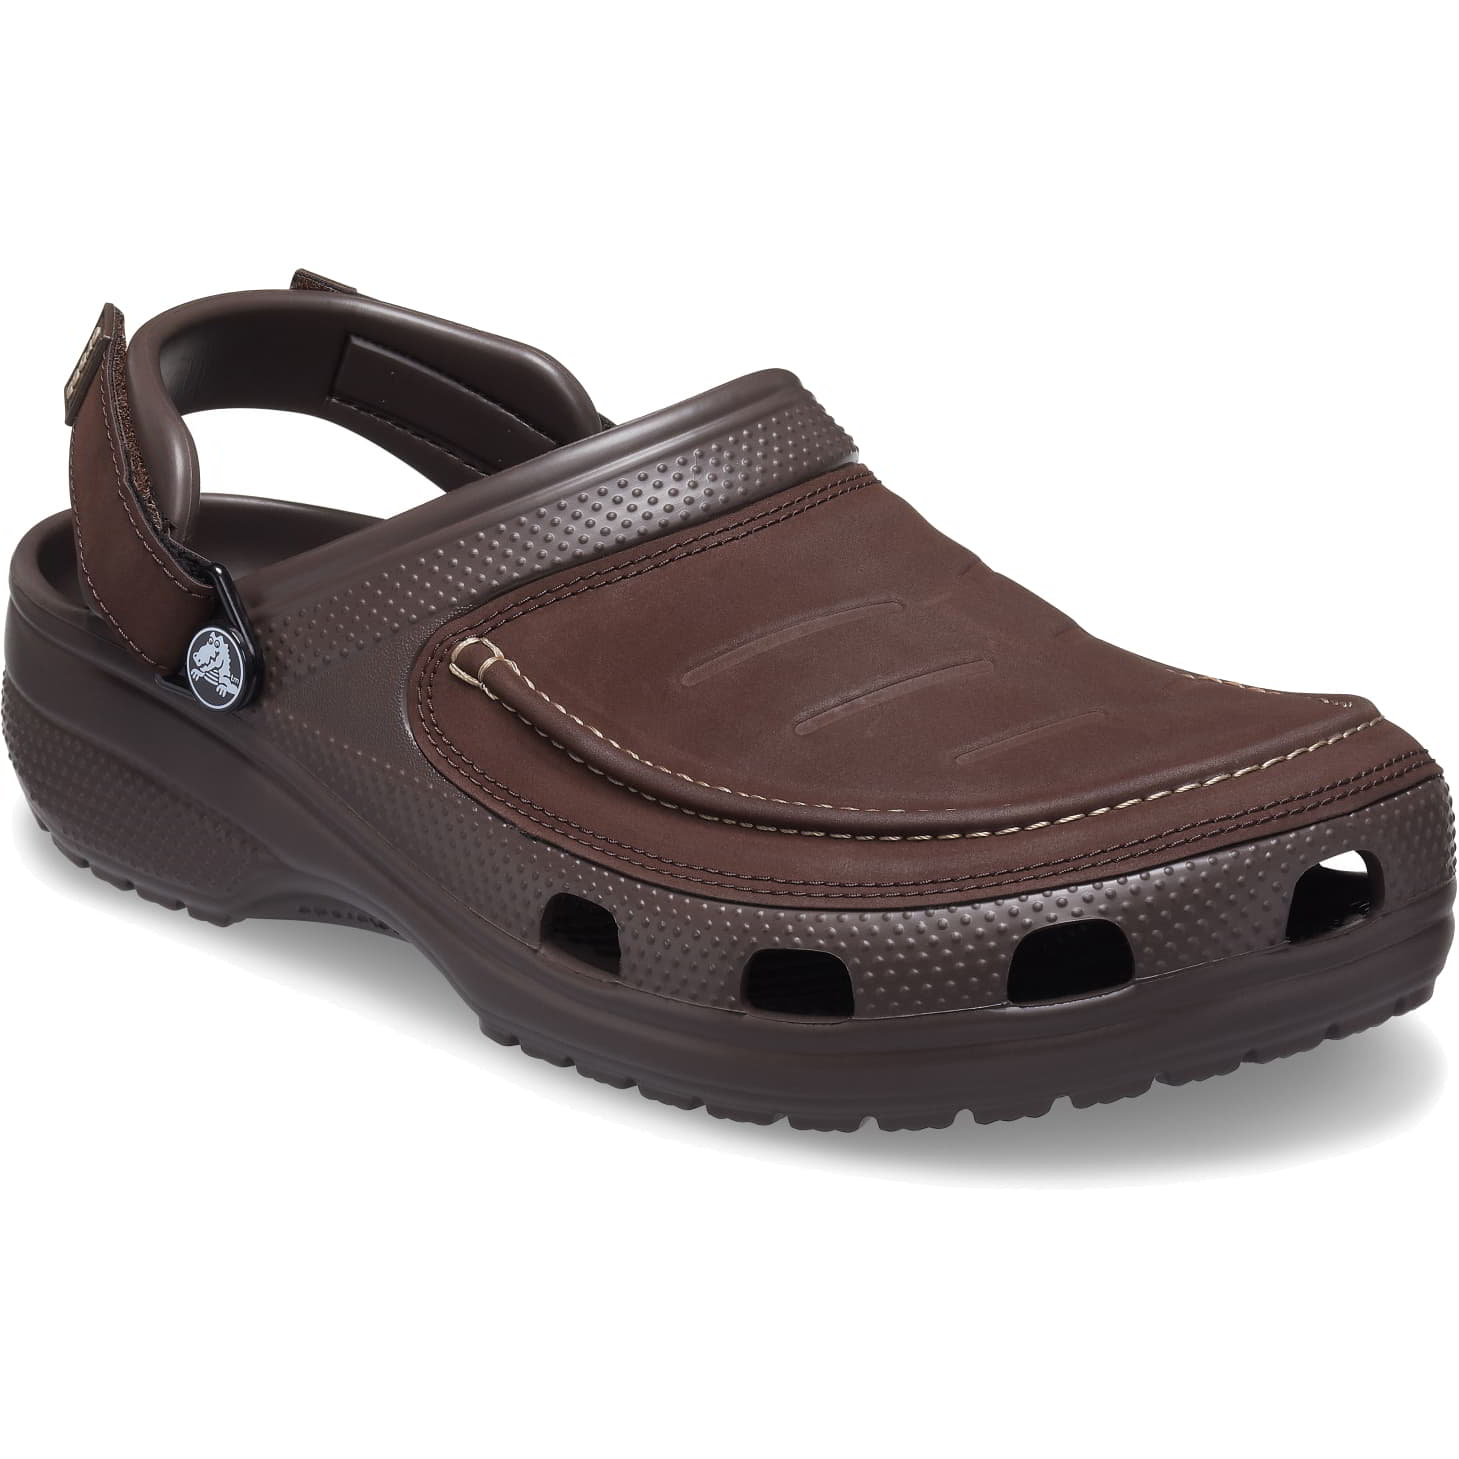 Crocs Men's Yukon Vista II Clog Slip On Clogs Shoes Sandals - UK 7 / EU 41-42 / M8